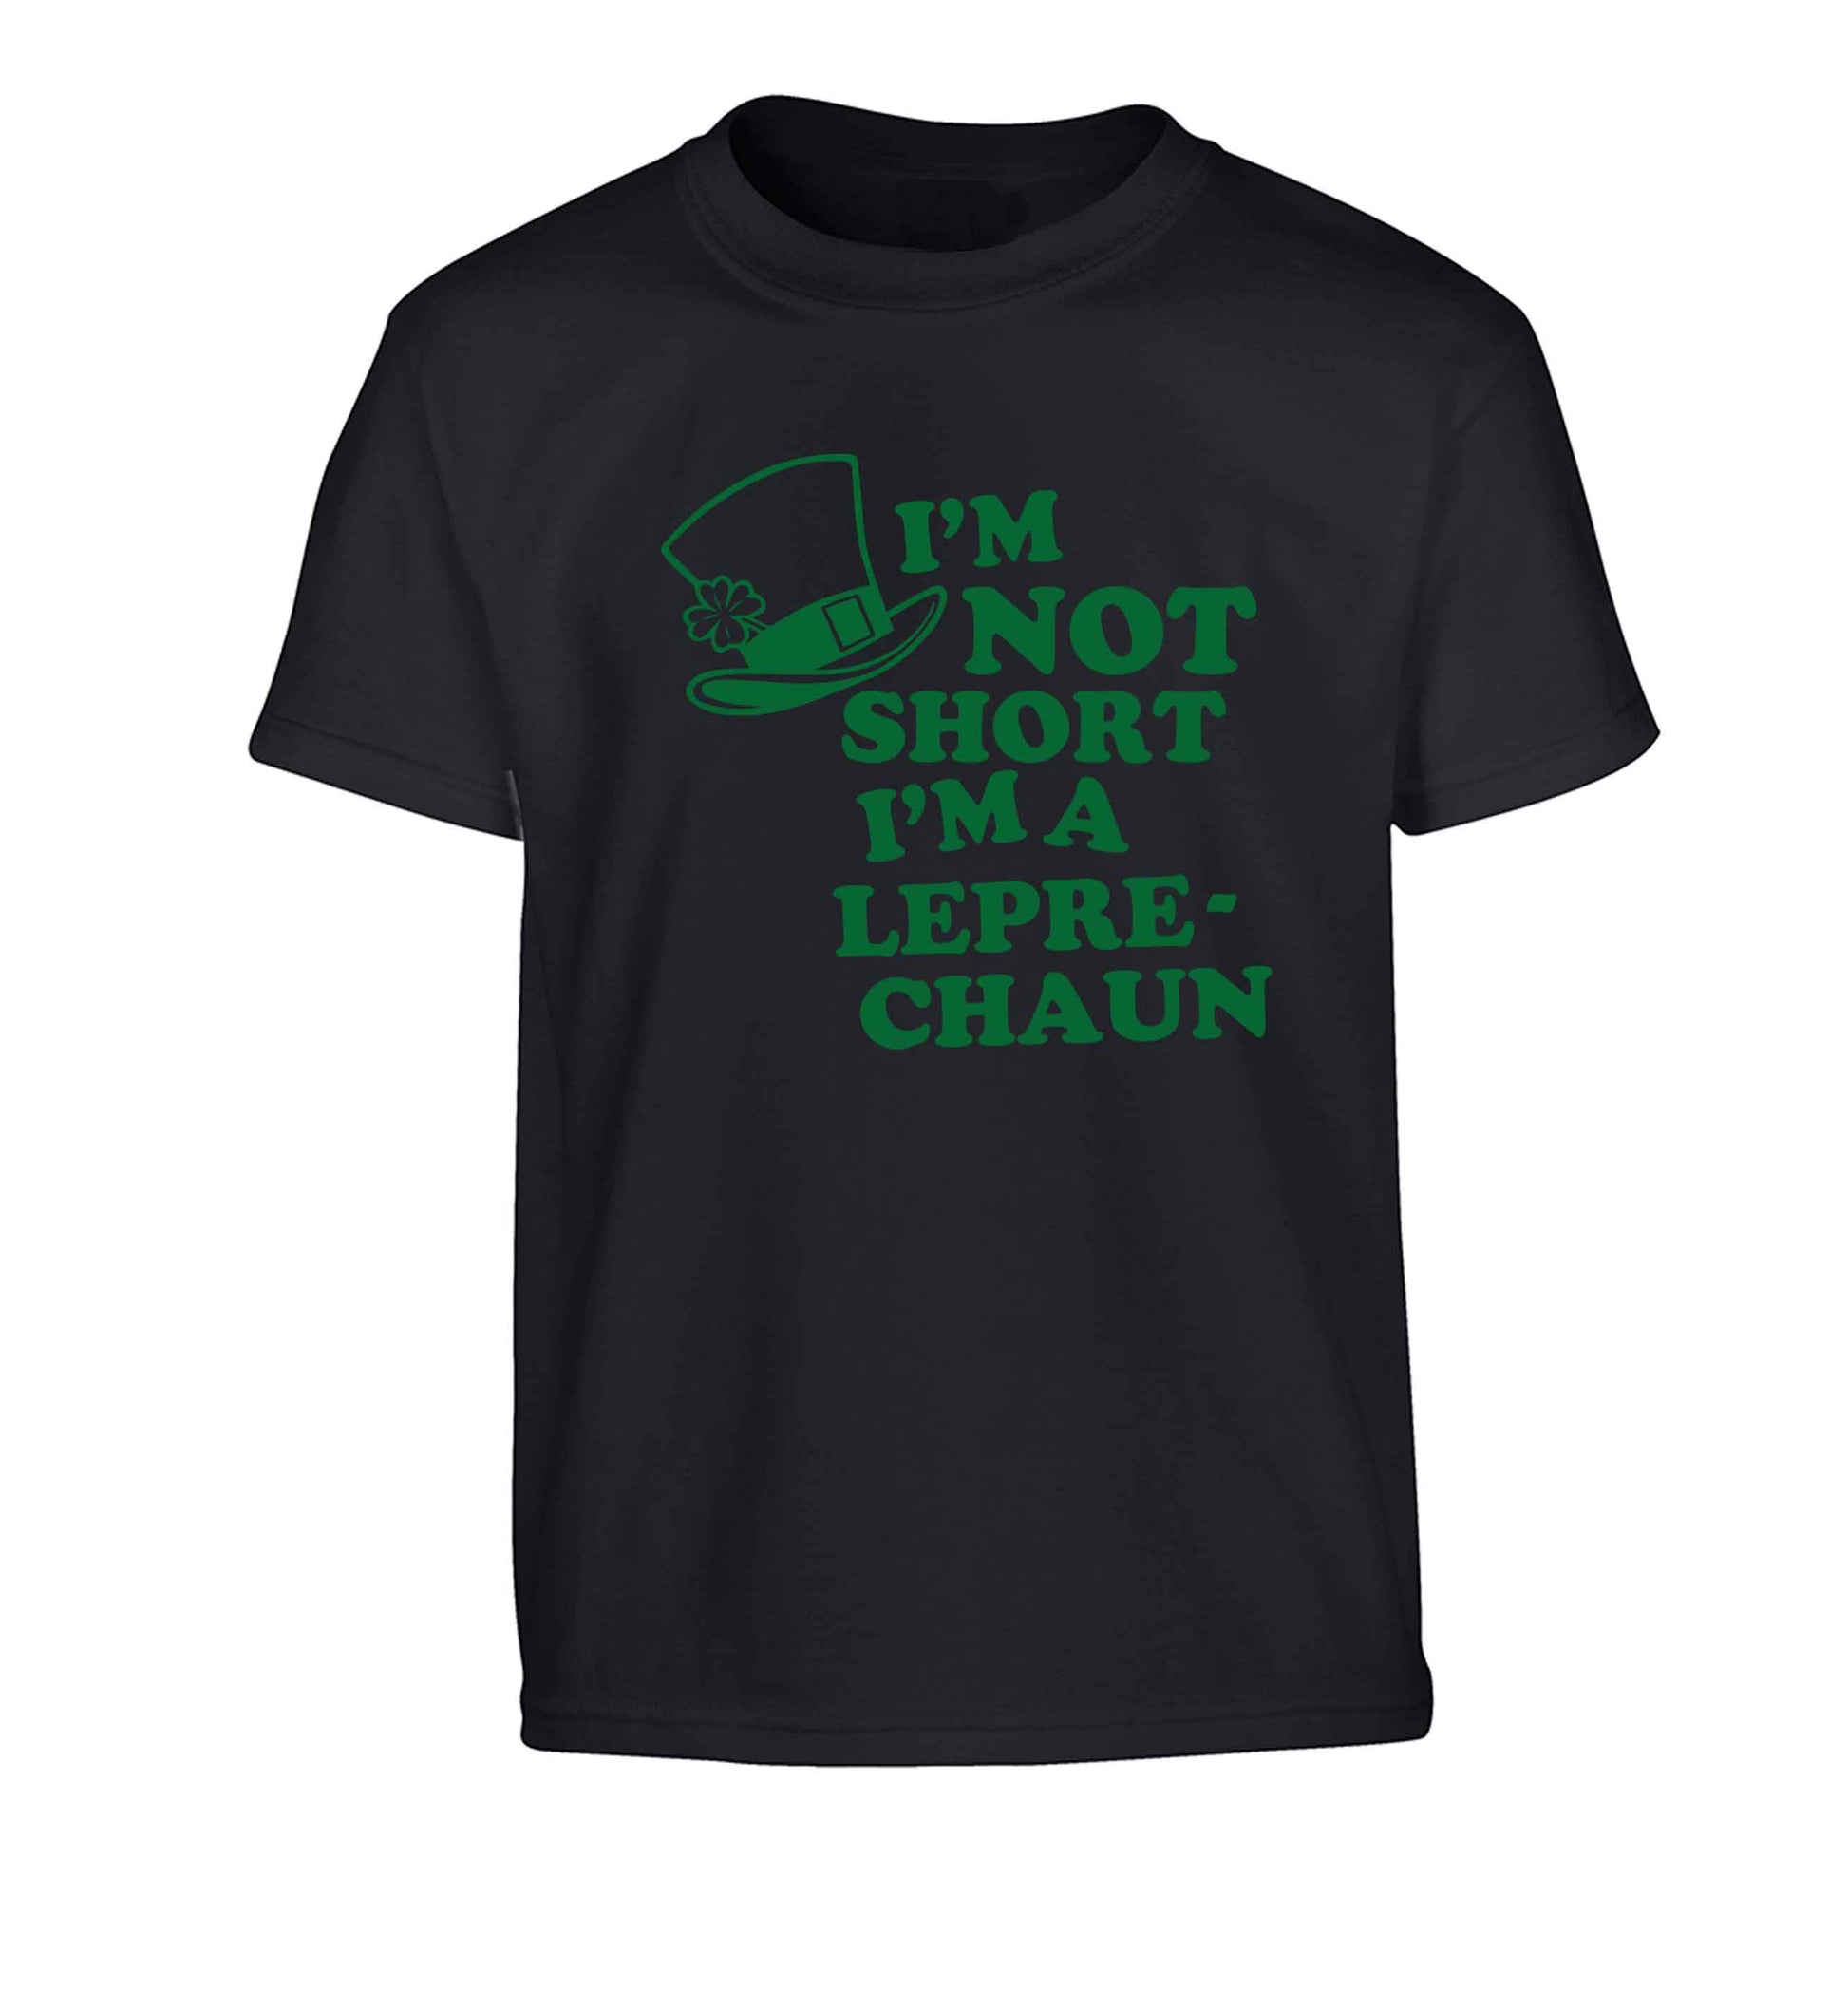 I'm not short I'm a leprechaun Children's black Tshirt 12-13 Years